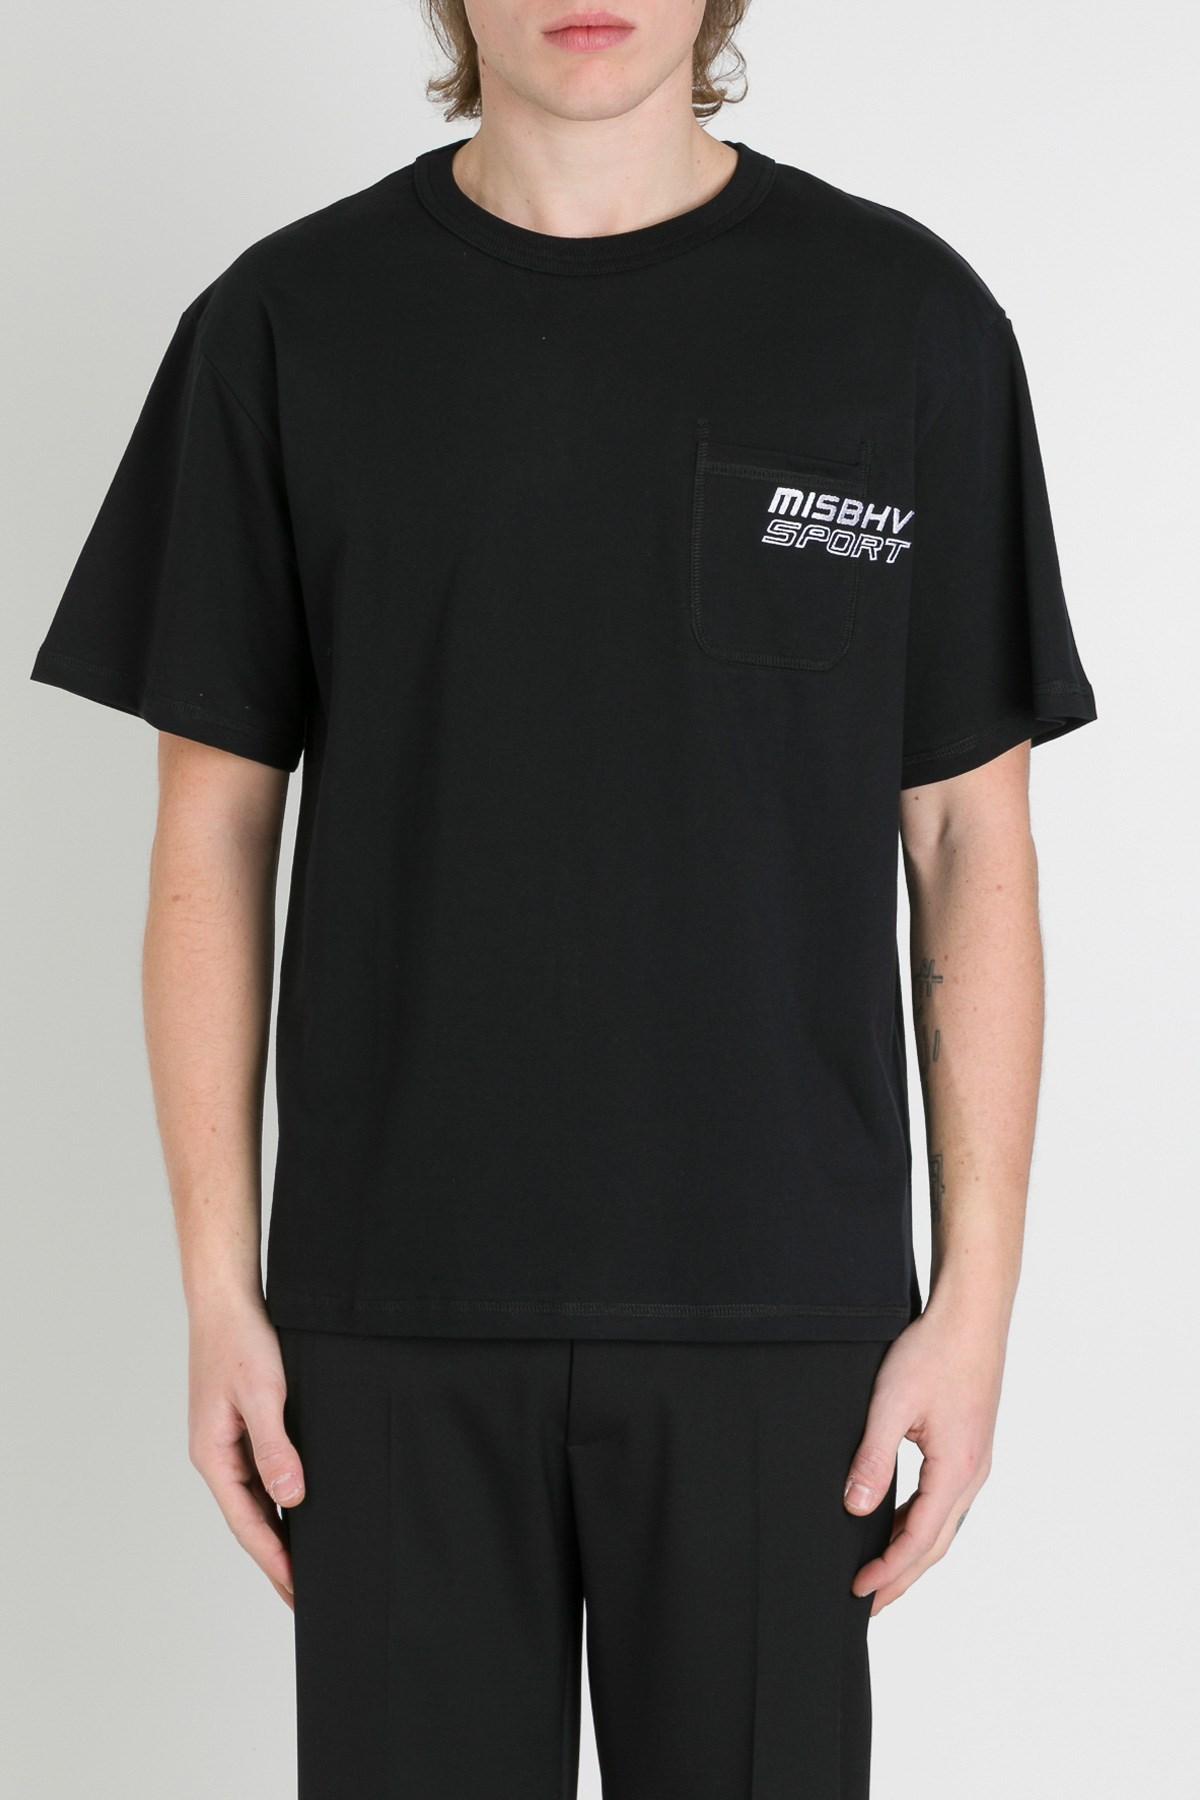 MISBHV Cotton Sport T-shirt in Black for Men - Lyst